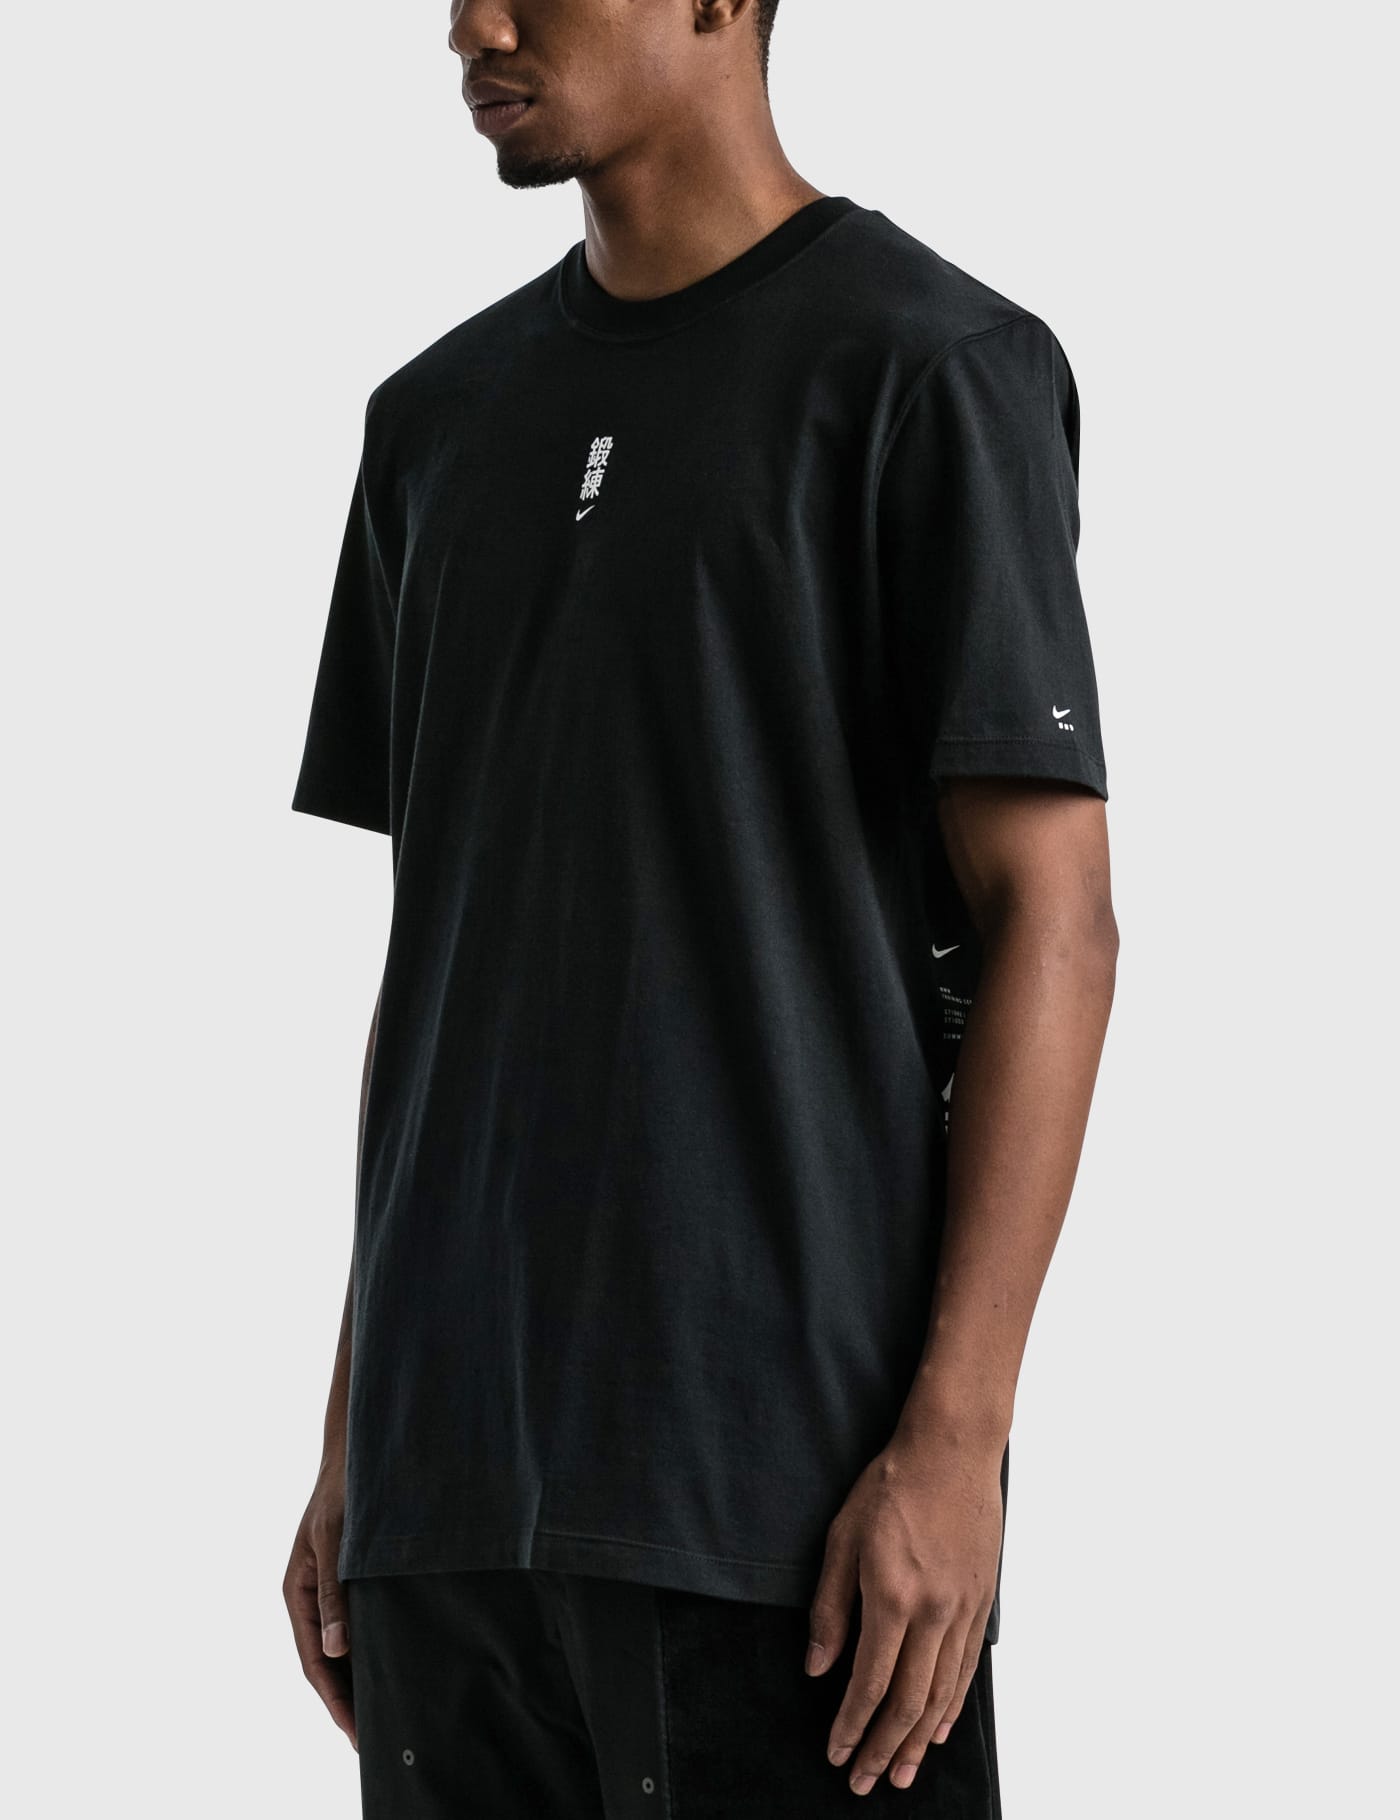 Nike - Nike X MMW T-shirt | HBX - ハイプビースト(Hypebeast)が厳選